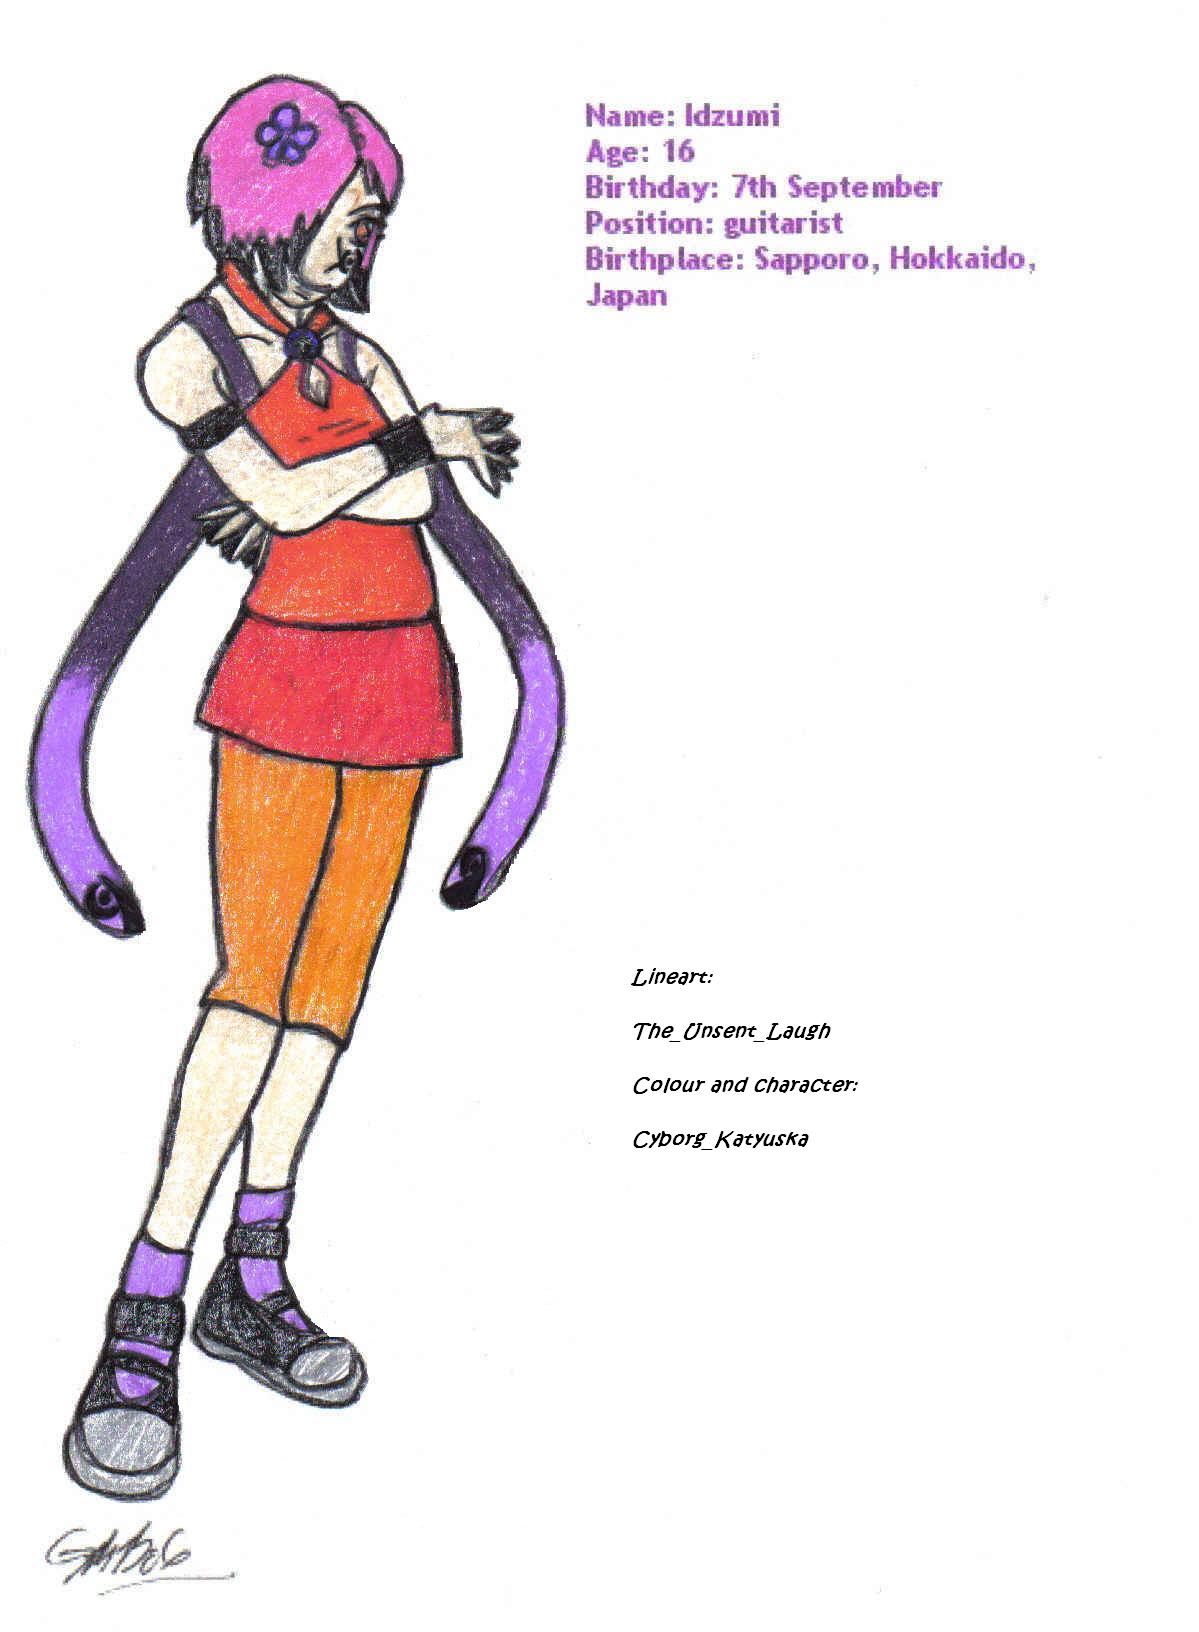 Idzumi profile - coloured by cyborg_katyuska